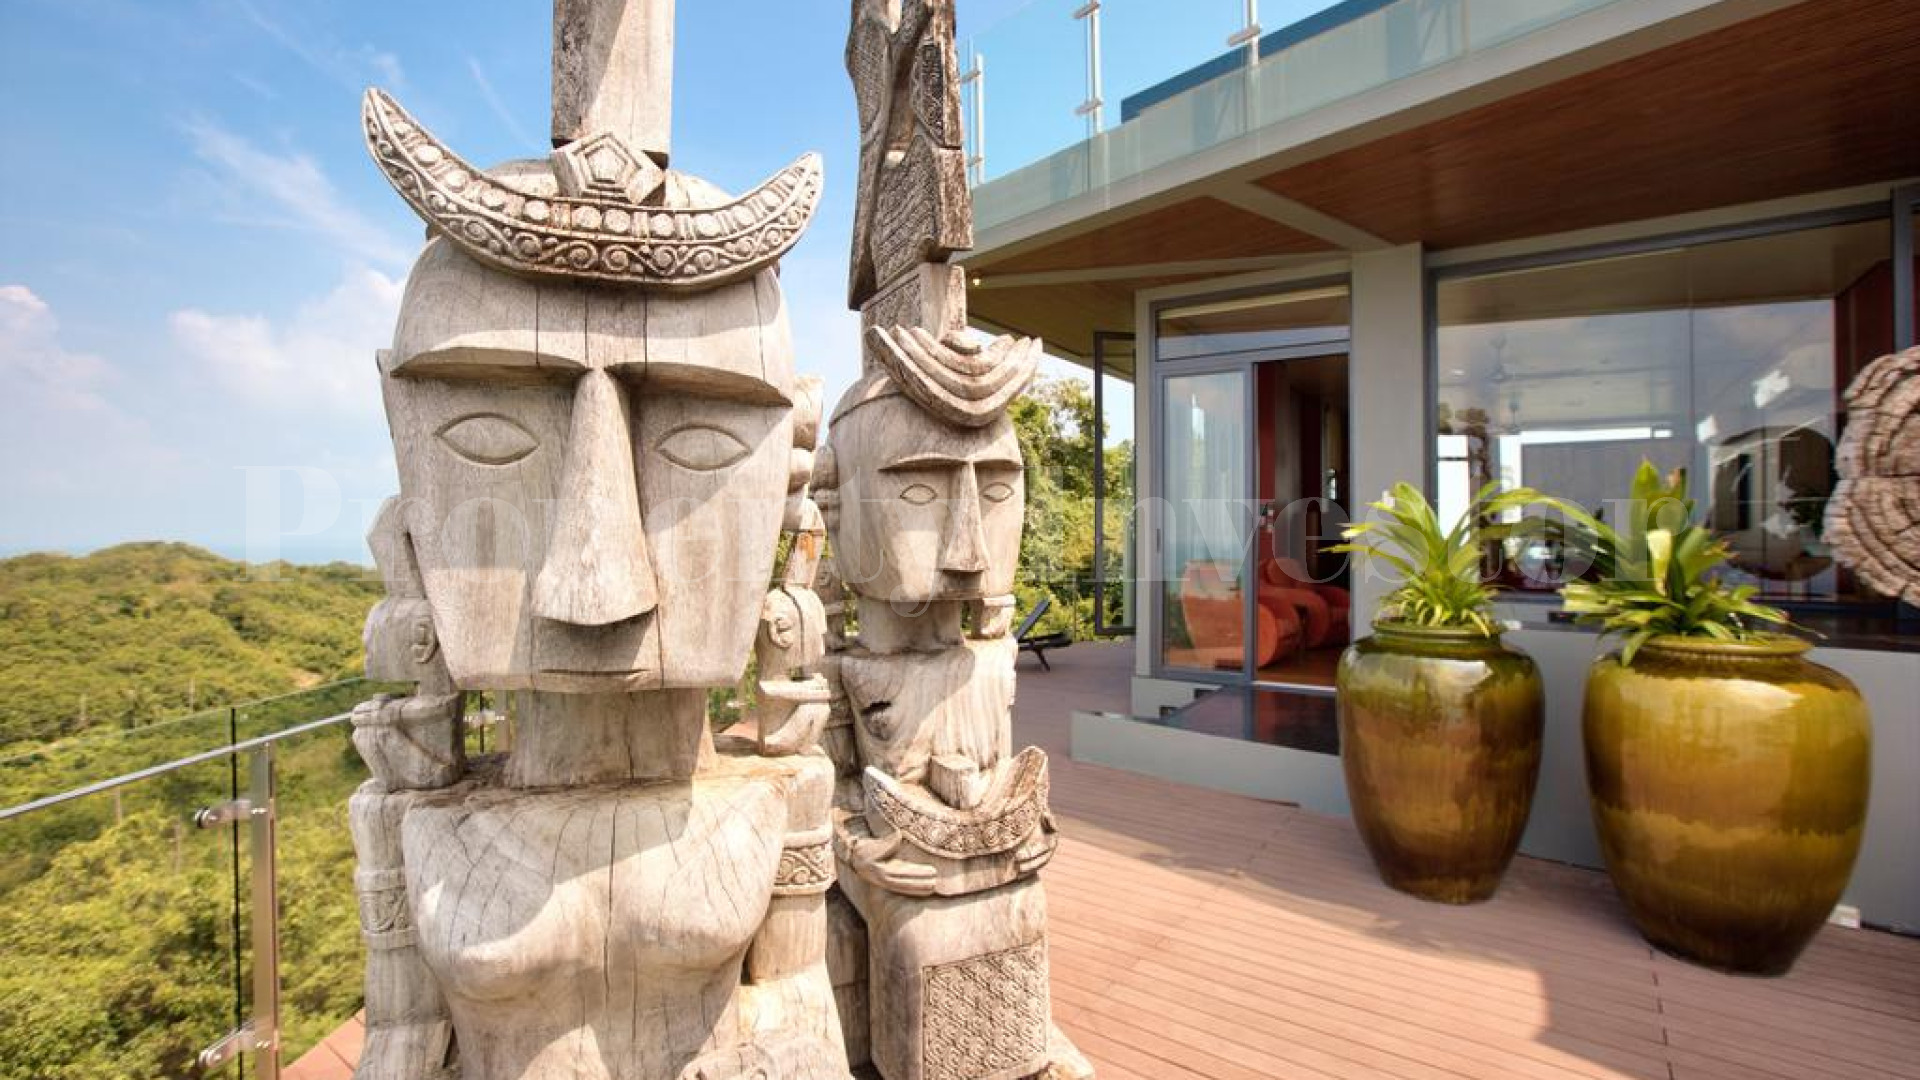 Exceptional 8 Bedroom Luxury Sea View Hillside Villa for Sale in Koh Samui, Thailand